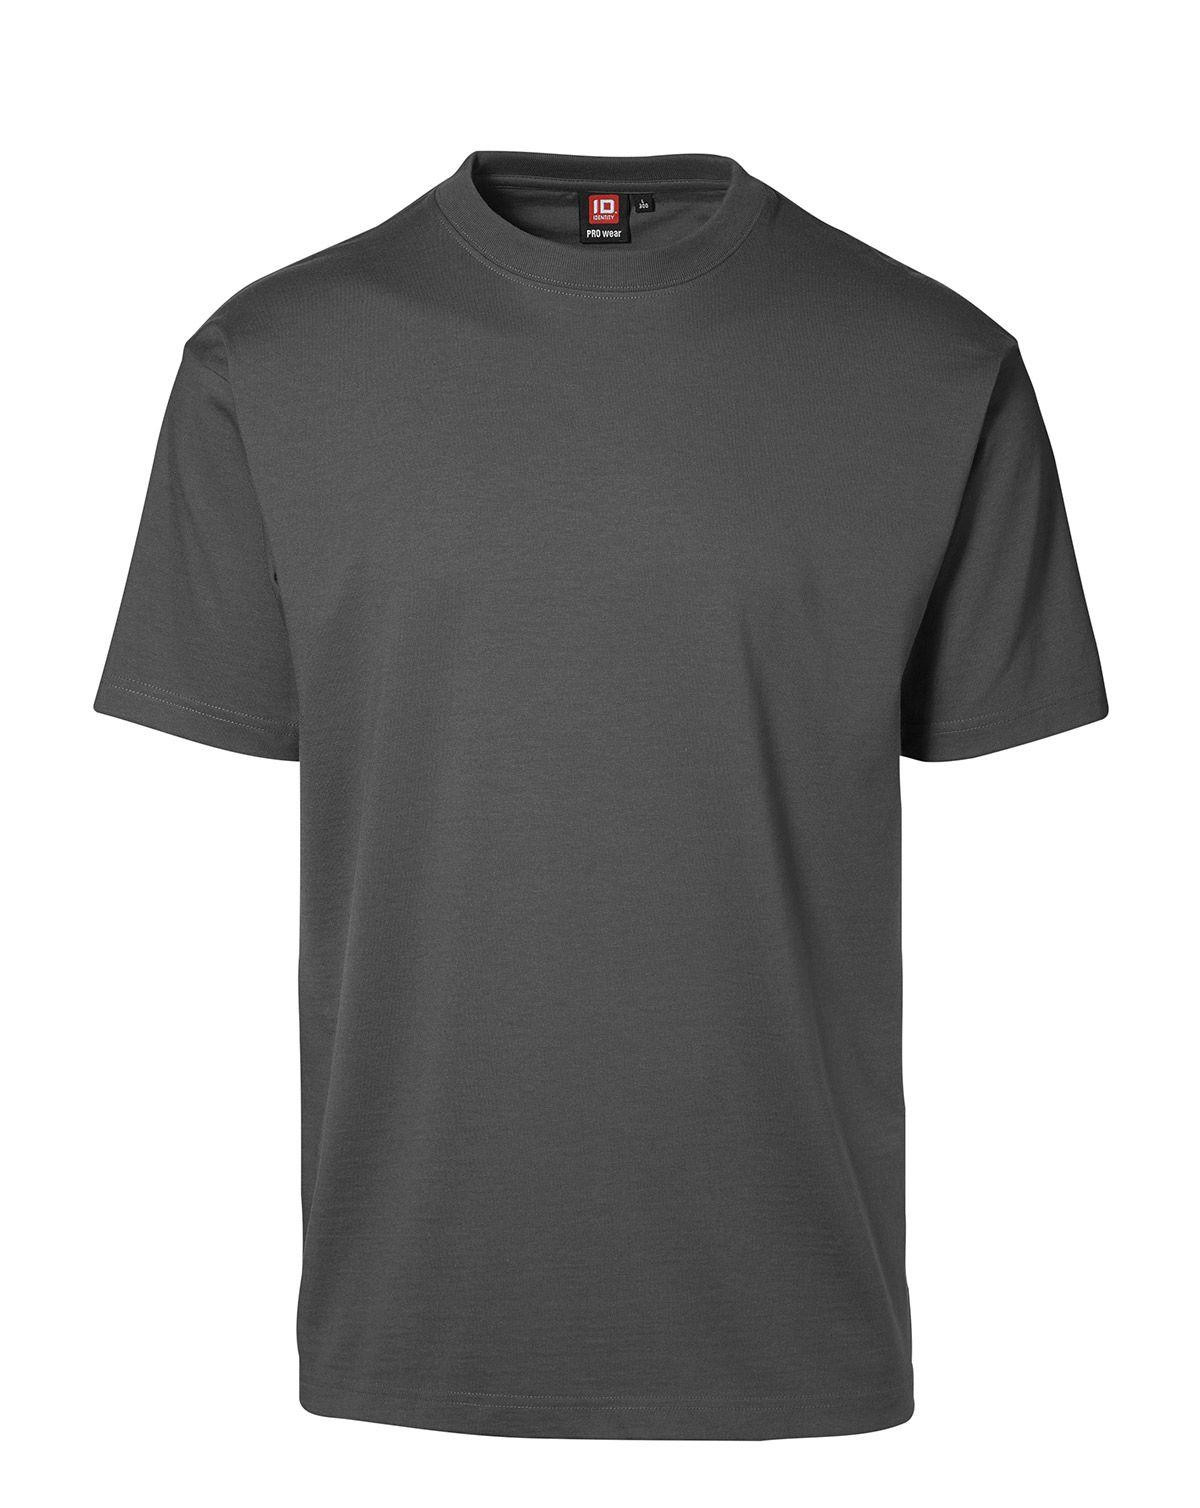 ID PRO Wear T-shirt til Herre (Sølv Grå, 3XL)